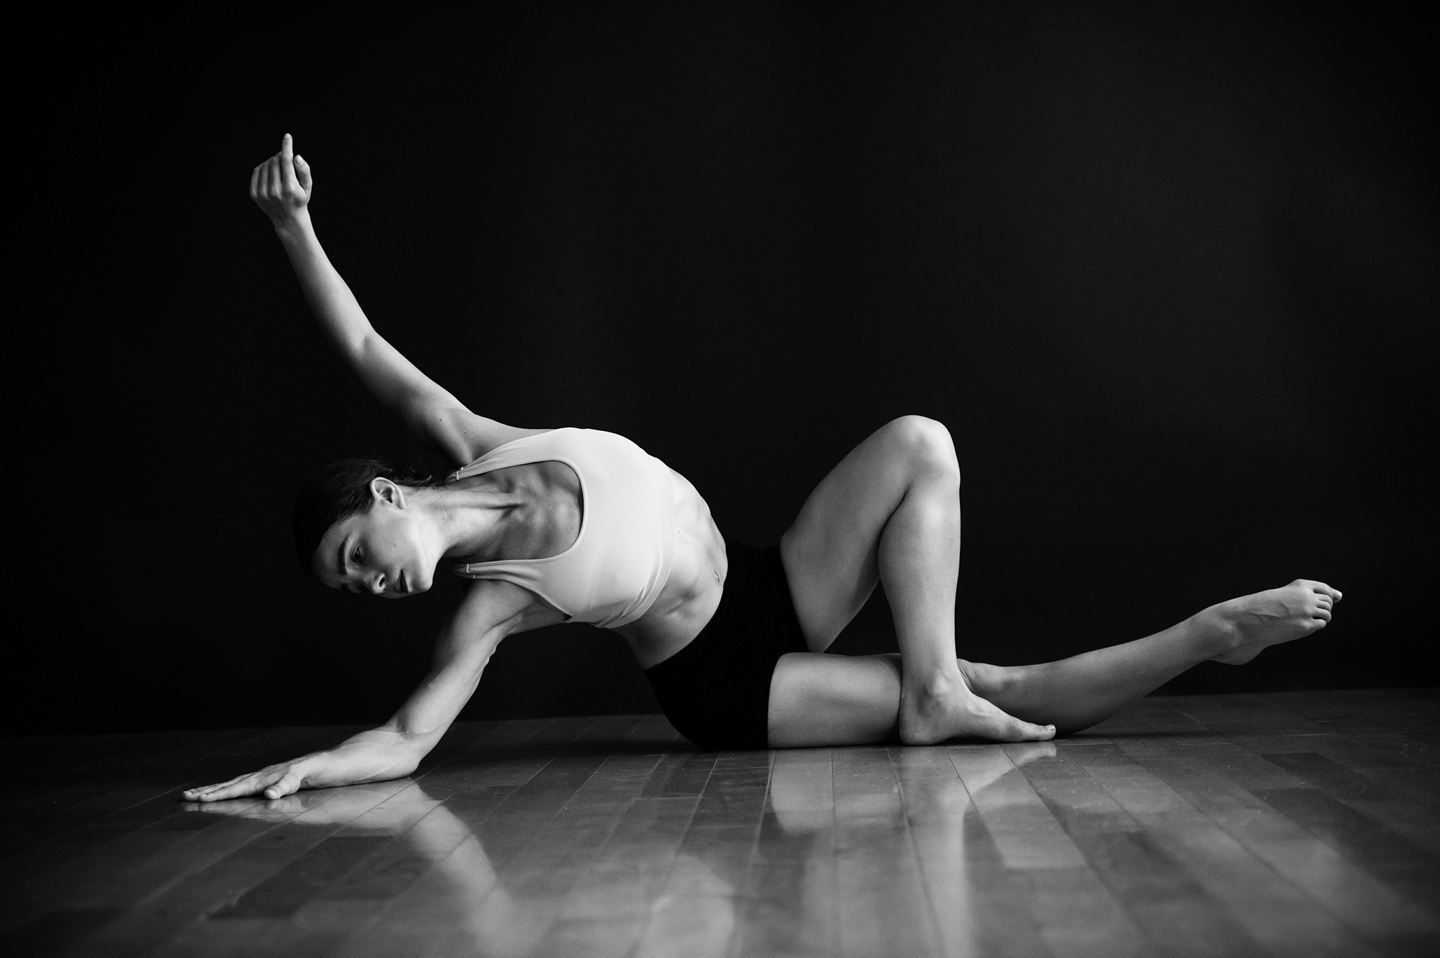 Los Angeles Dance Portrait Photo - Olga Sokolova - by Tommy Xing Photography 26.JPG